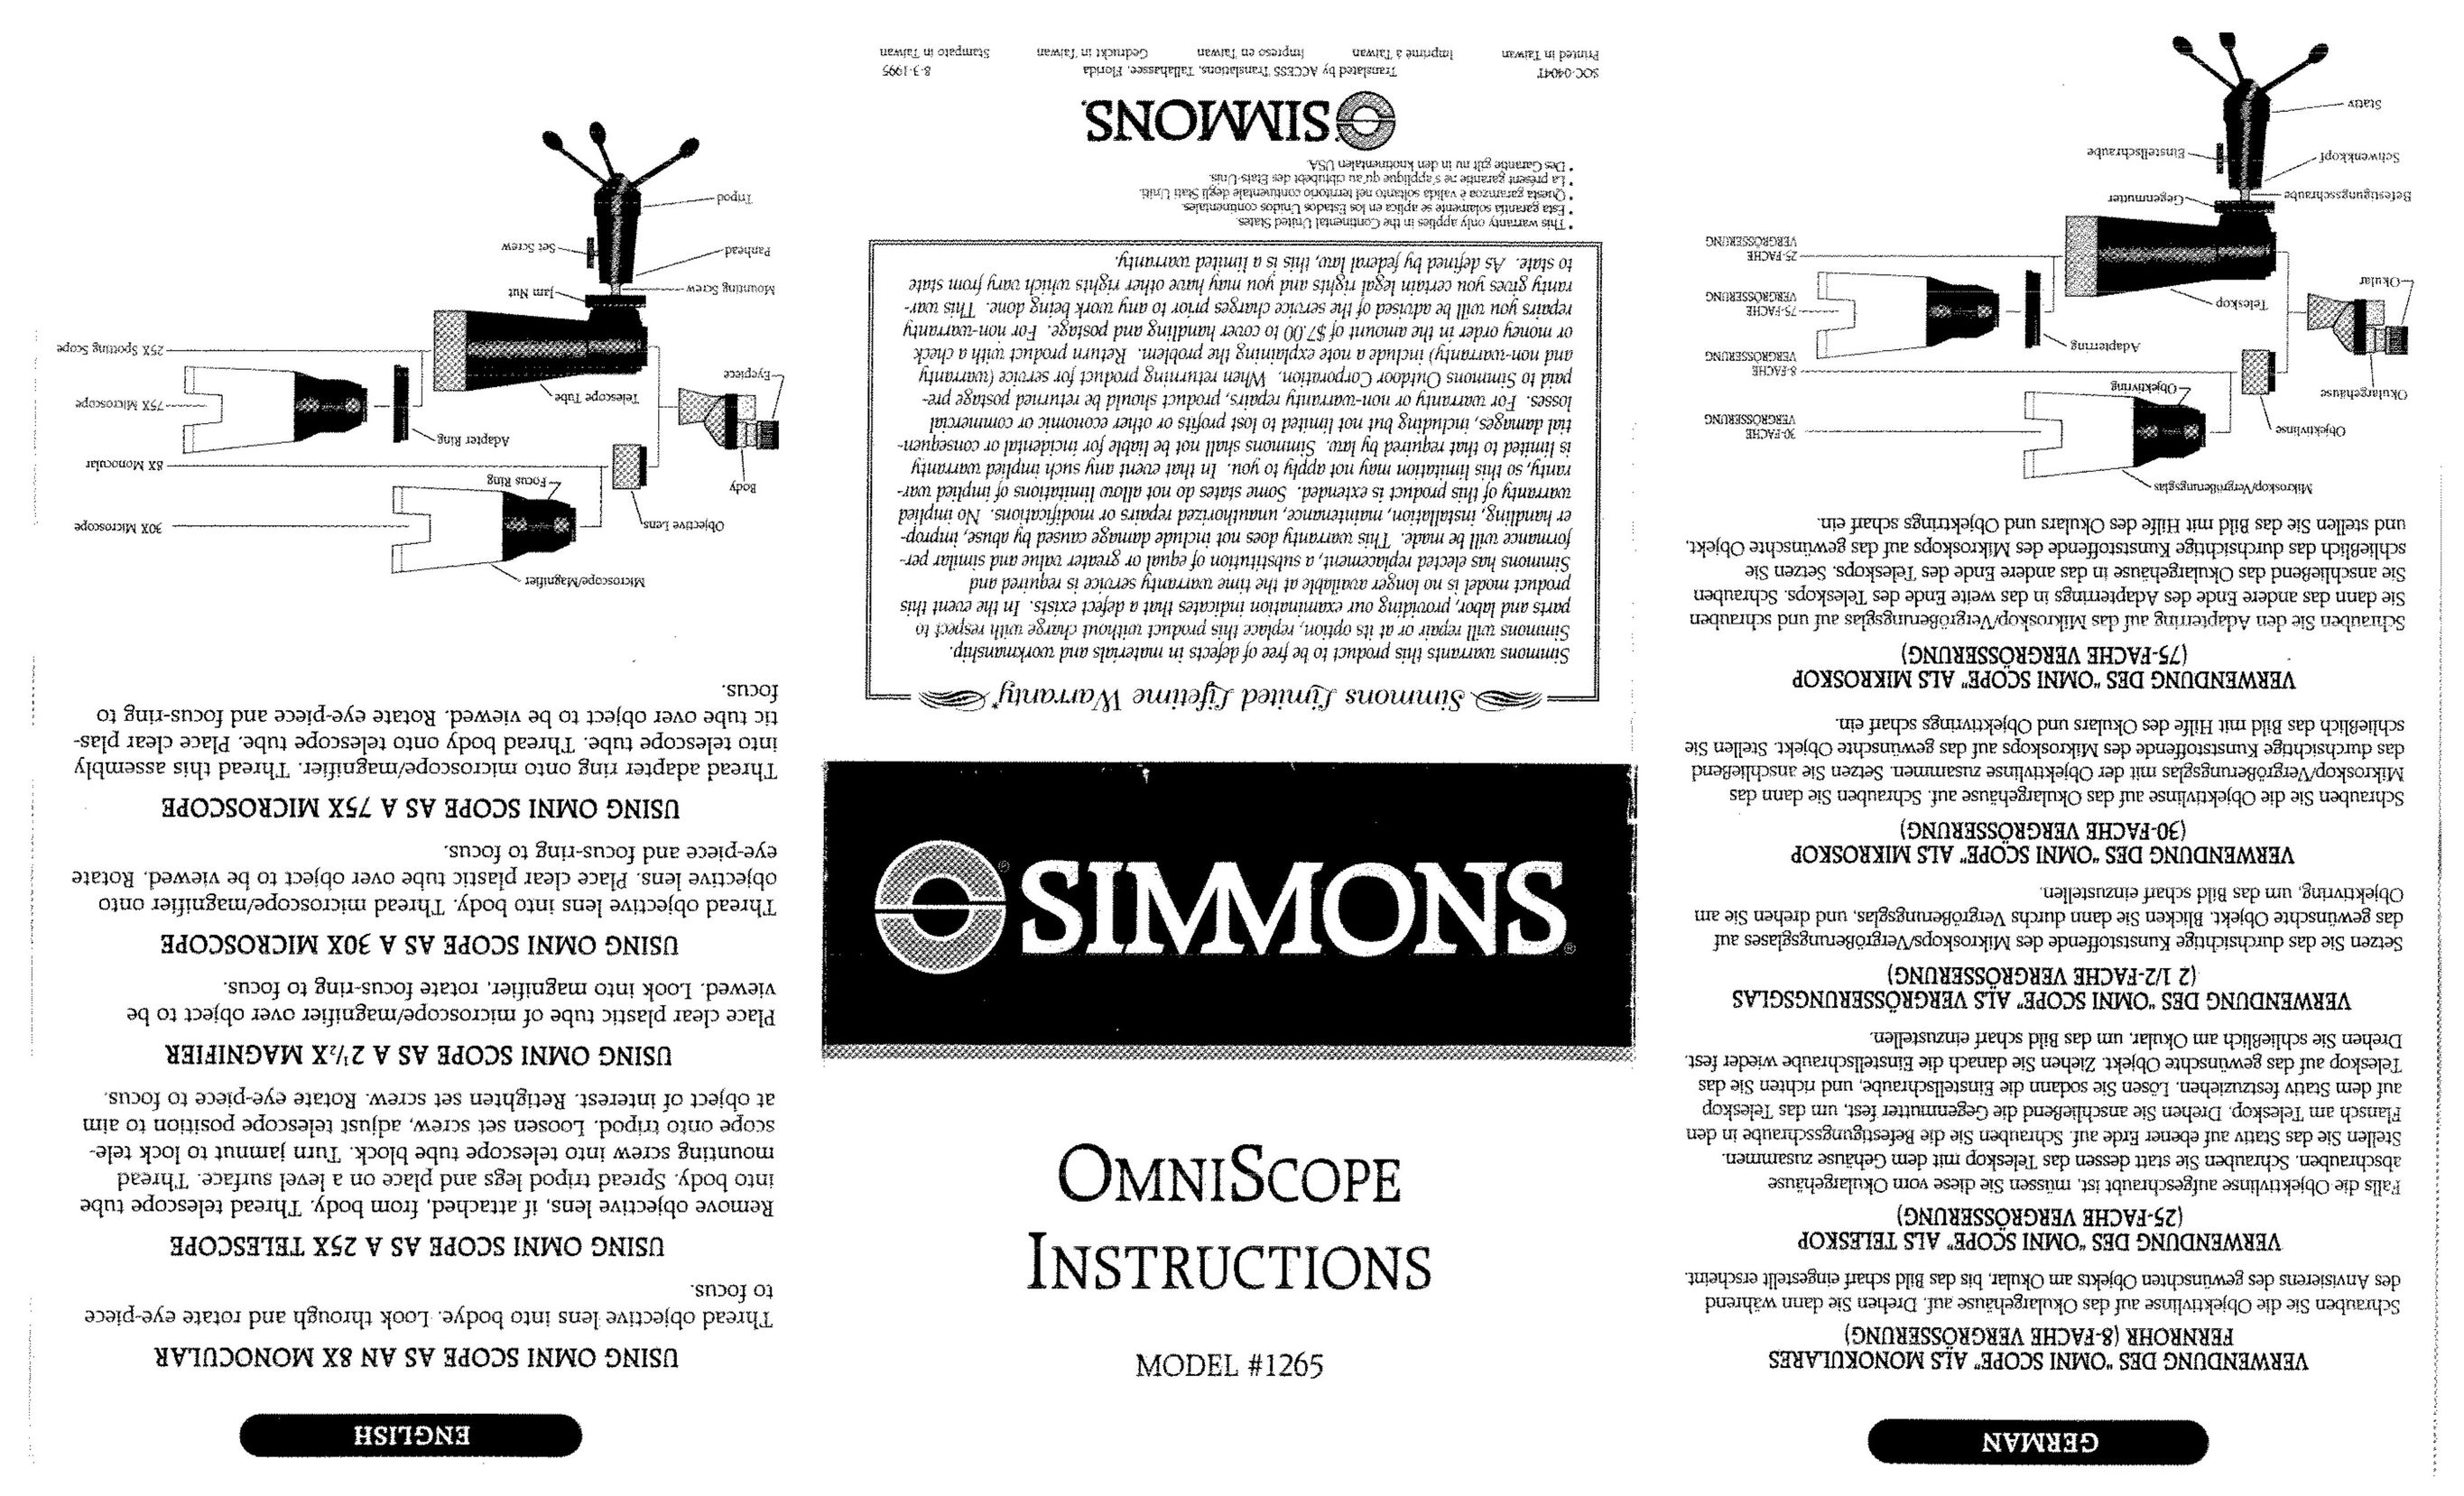 Simmons Optics 1265 Hunting Equipment User Manual